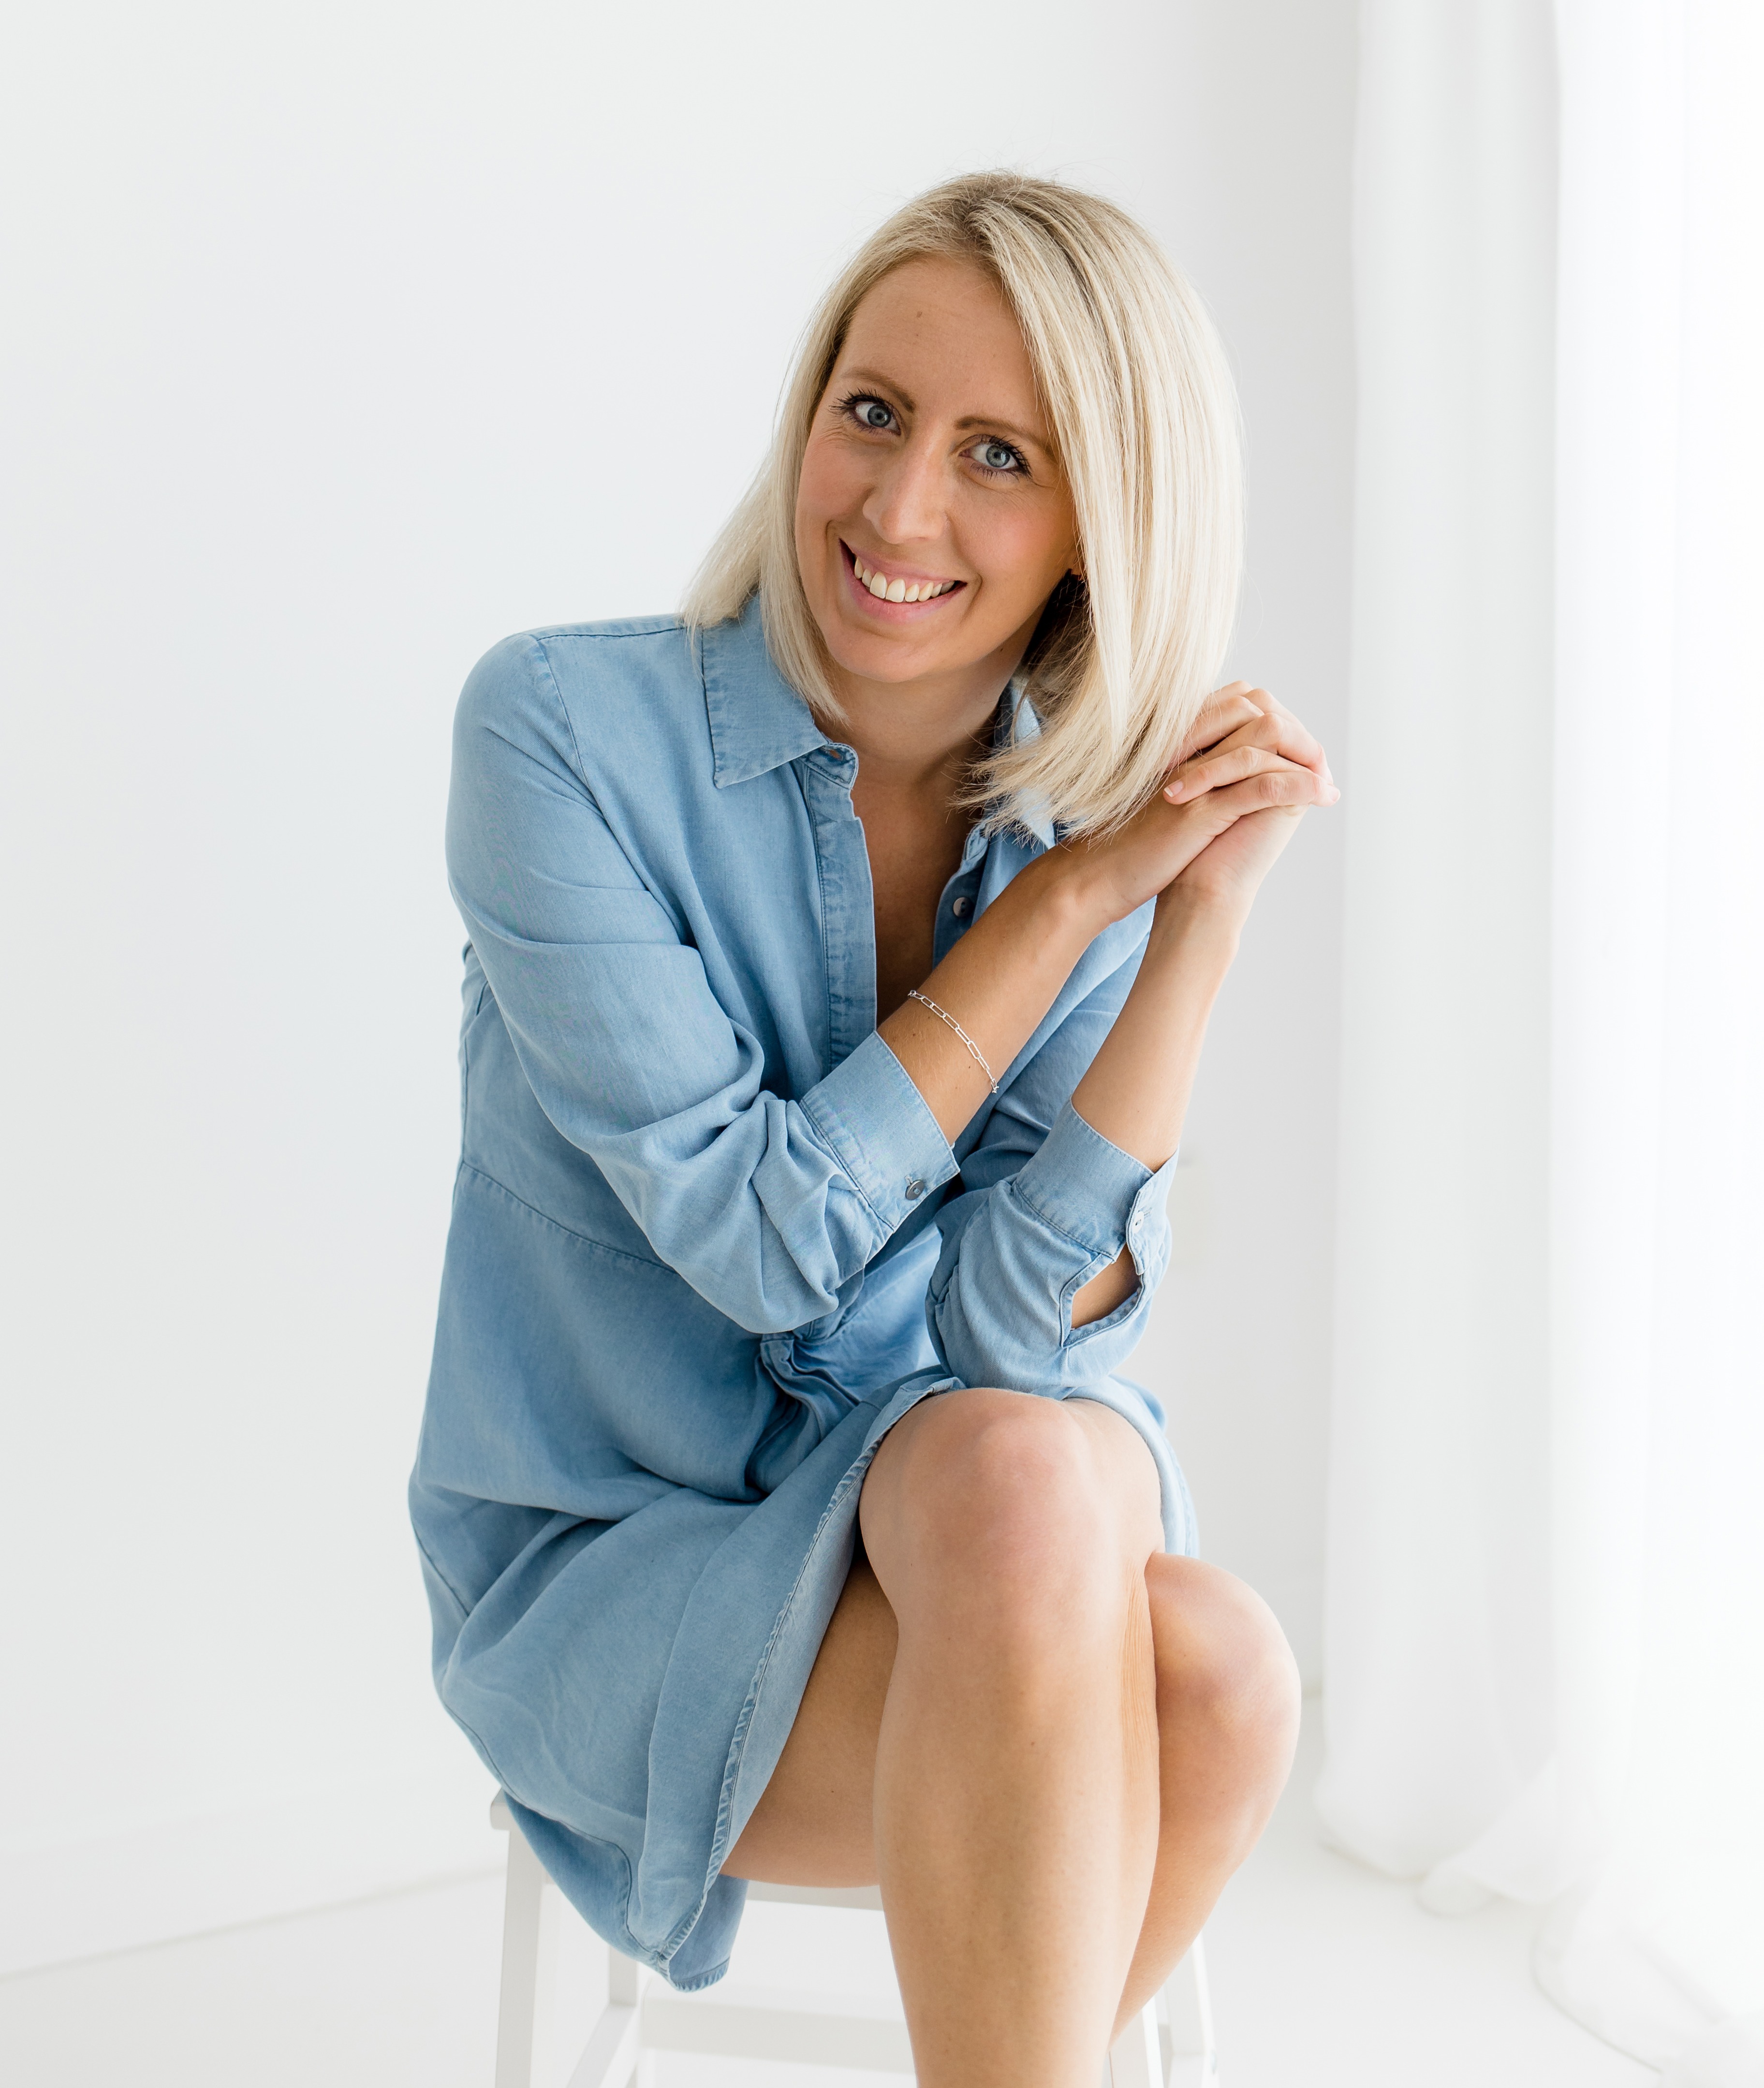 Heidi Skudder is founder of Positively Parenthood